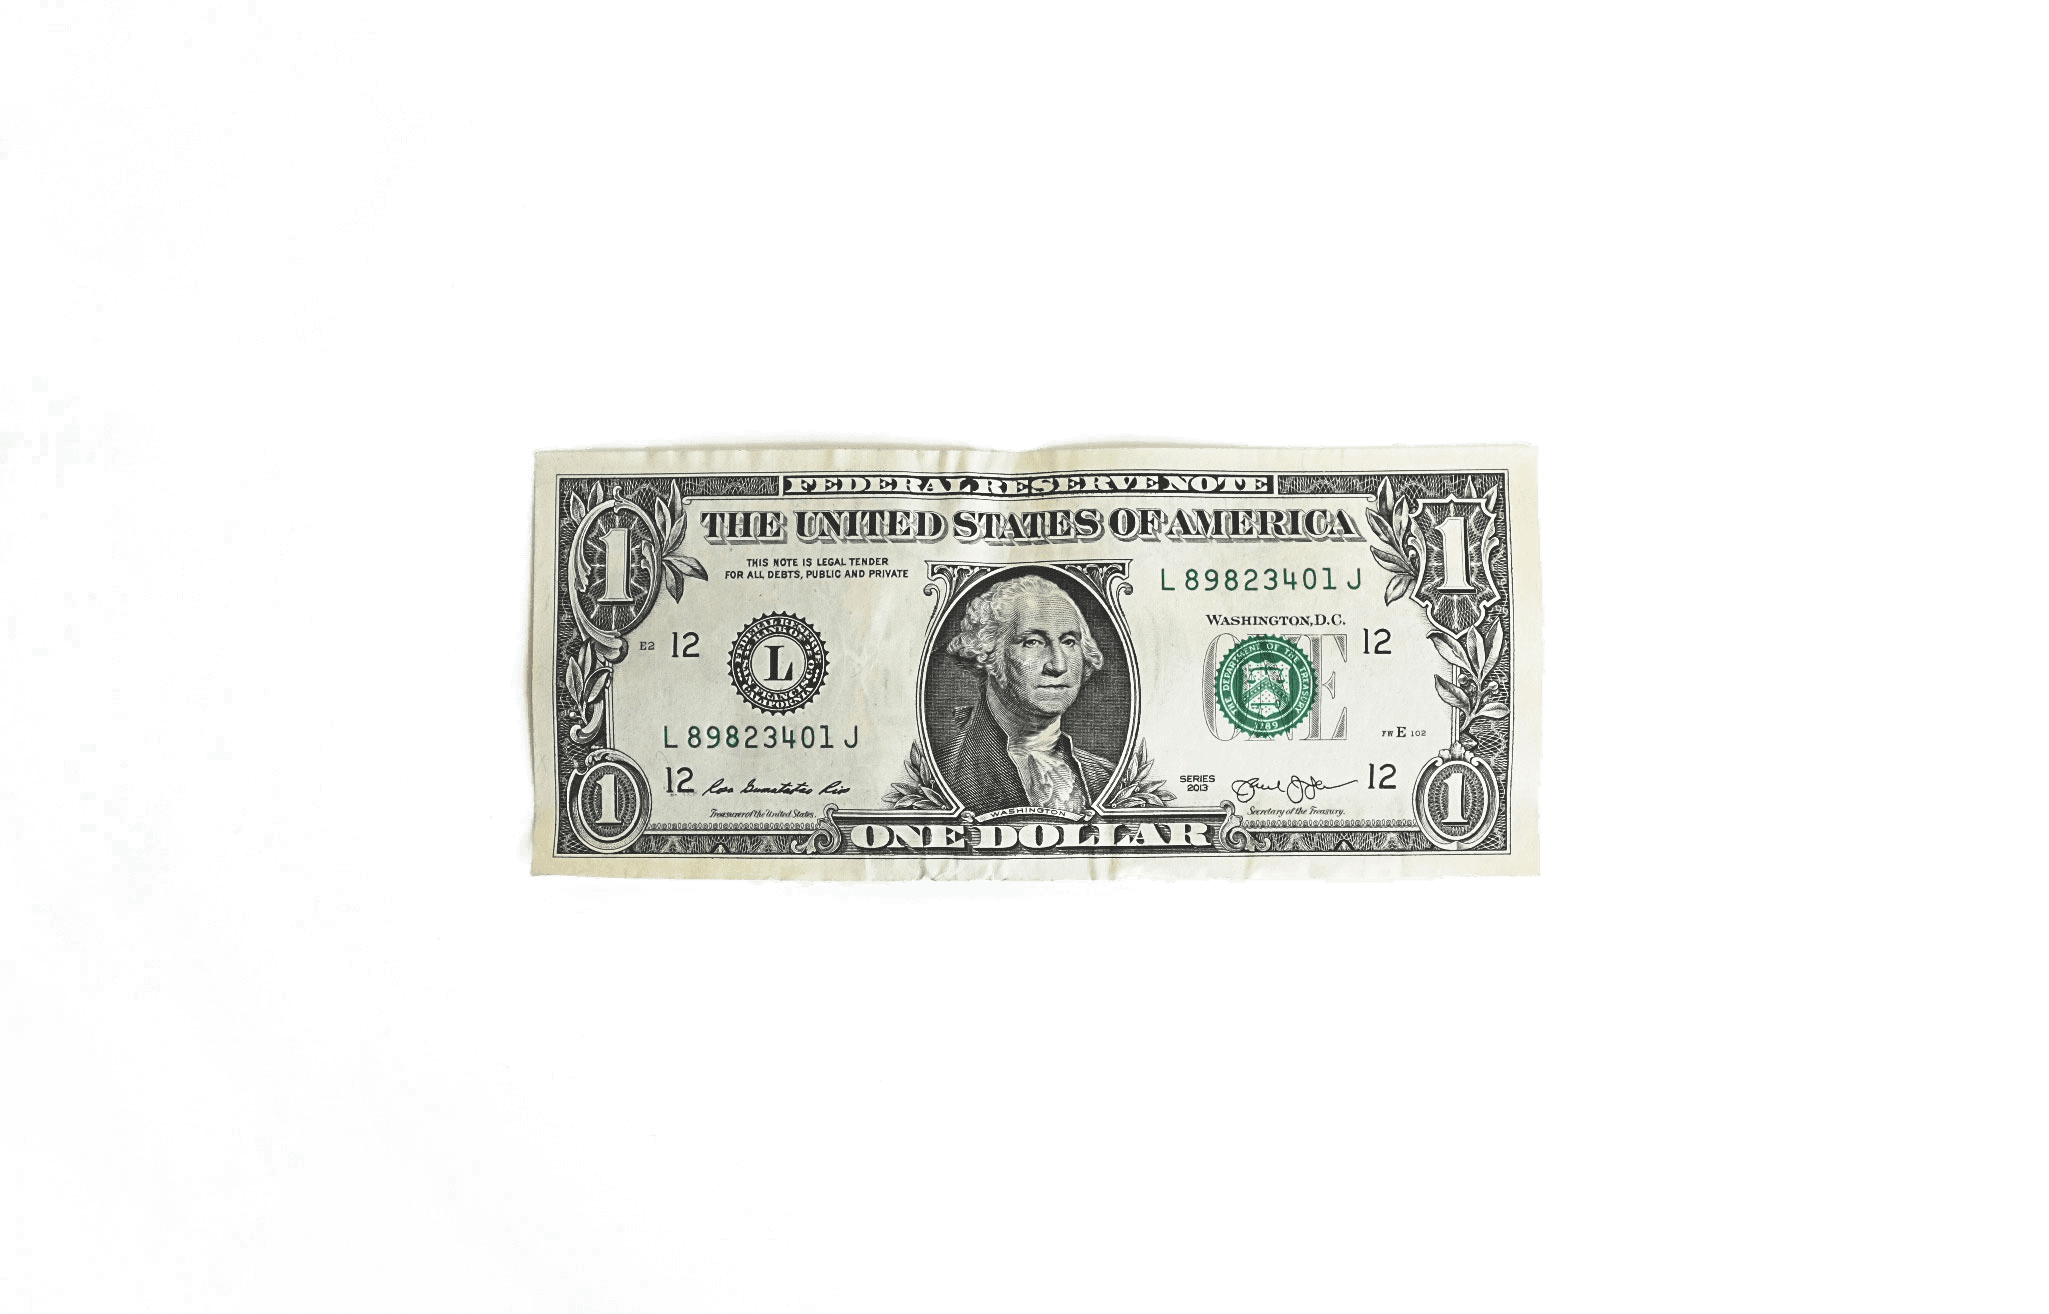 A slightly creased dollar bill